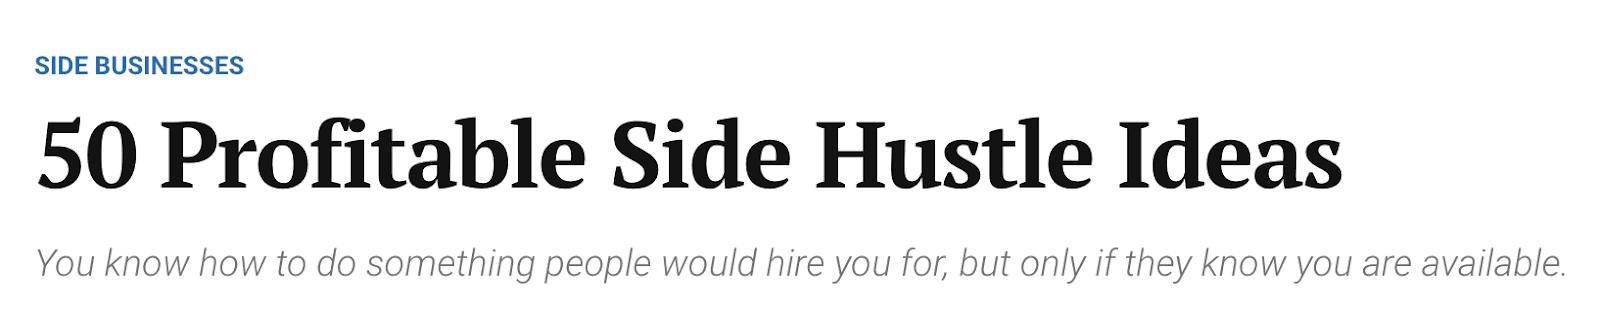 50 Profitable Side Hustle Ideas